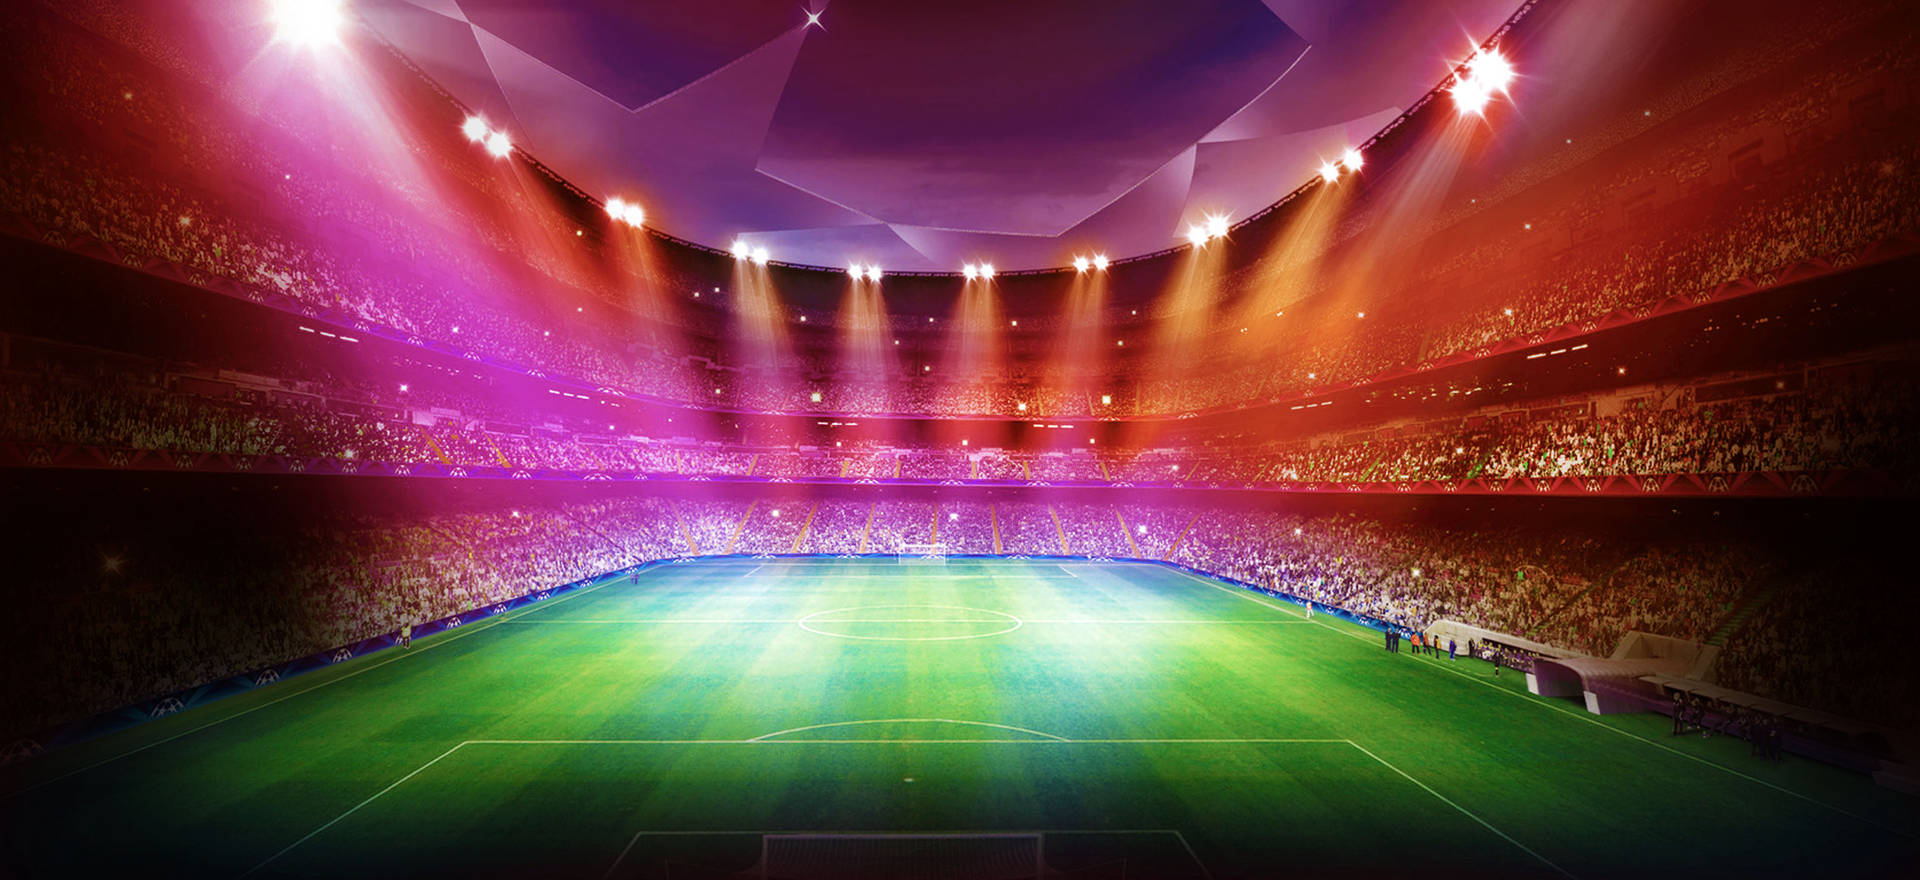 Football Stadium Reddish Pink Lights